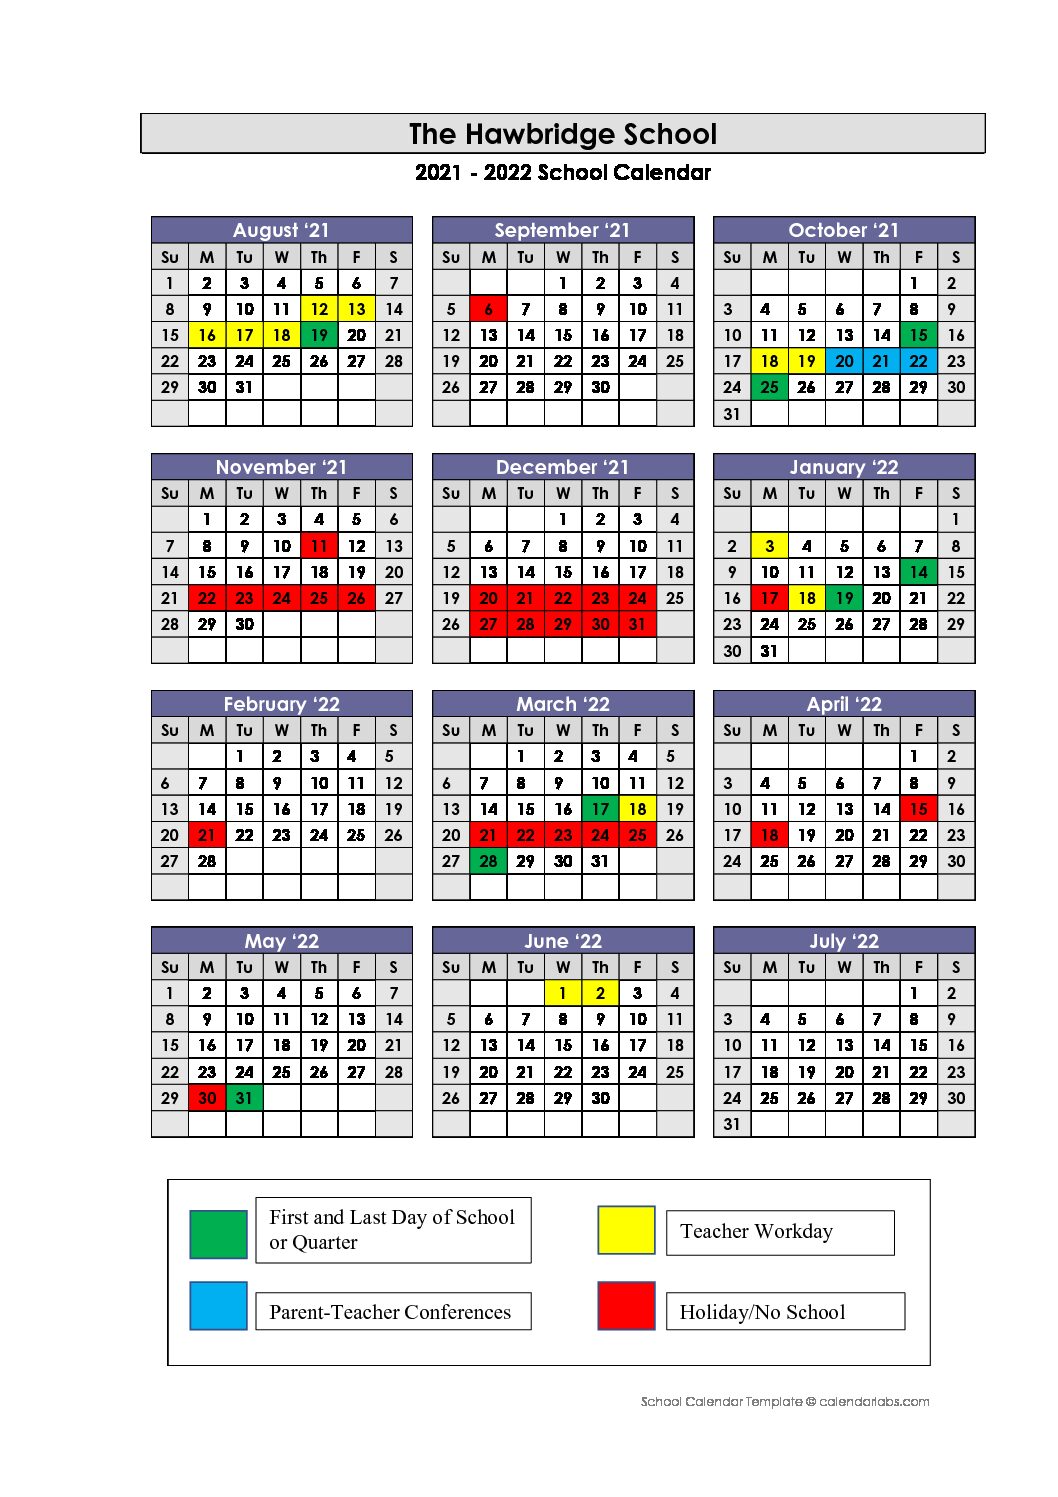 20212022 School Calendar The Hawbridge School